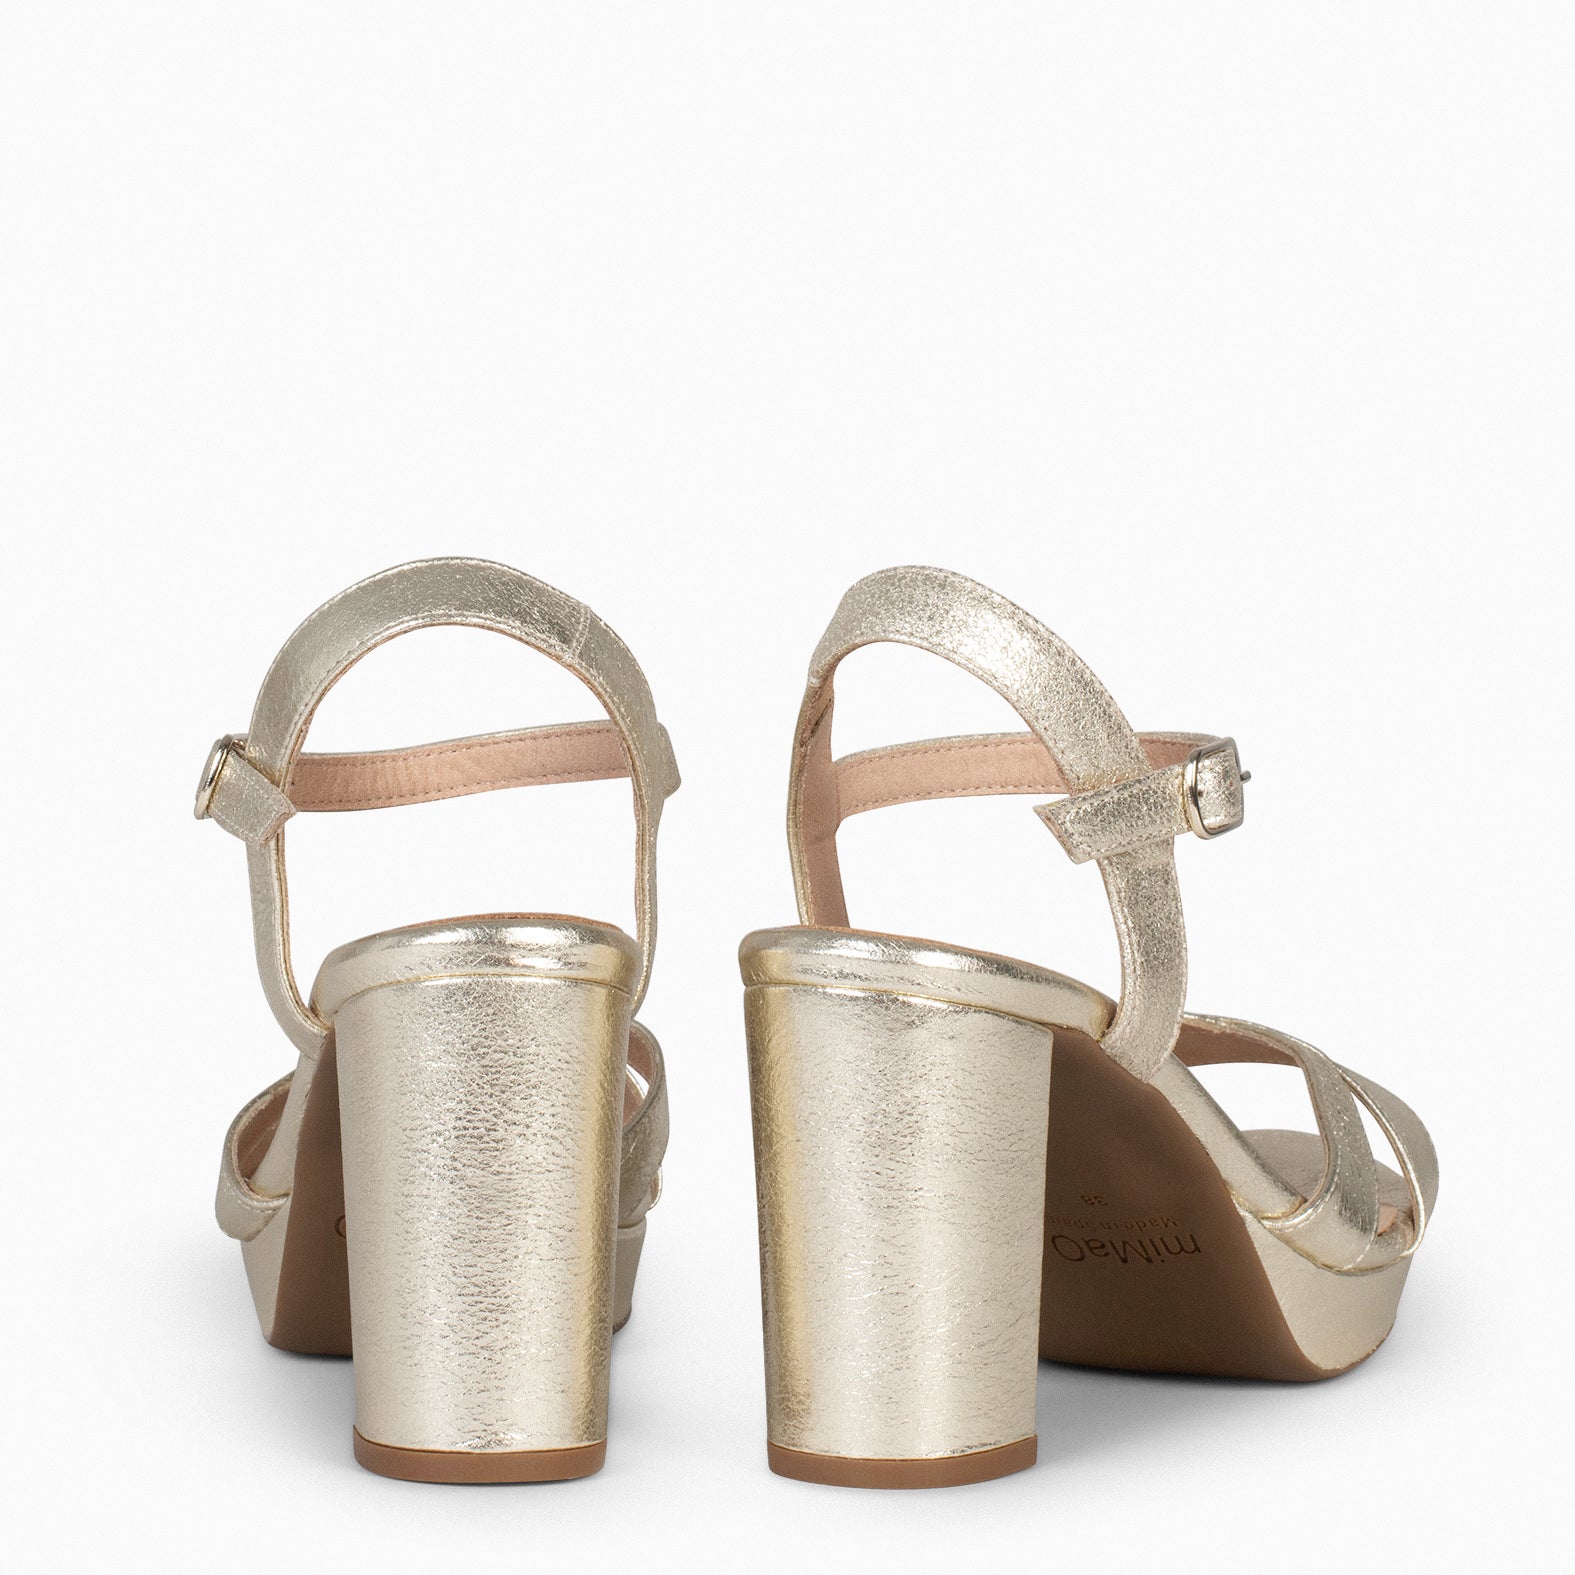 PARIS – GOLDEN high heel sandal with platform